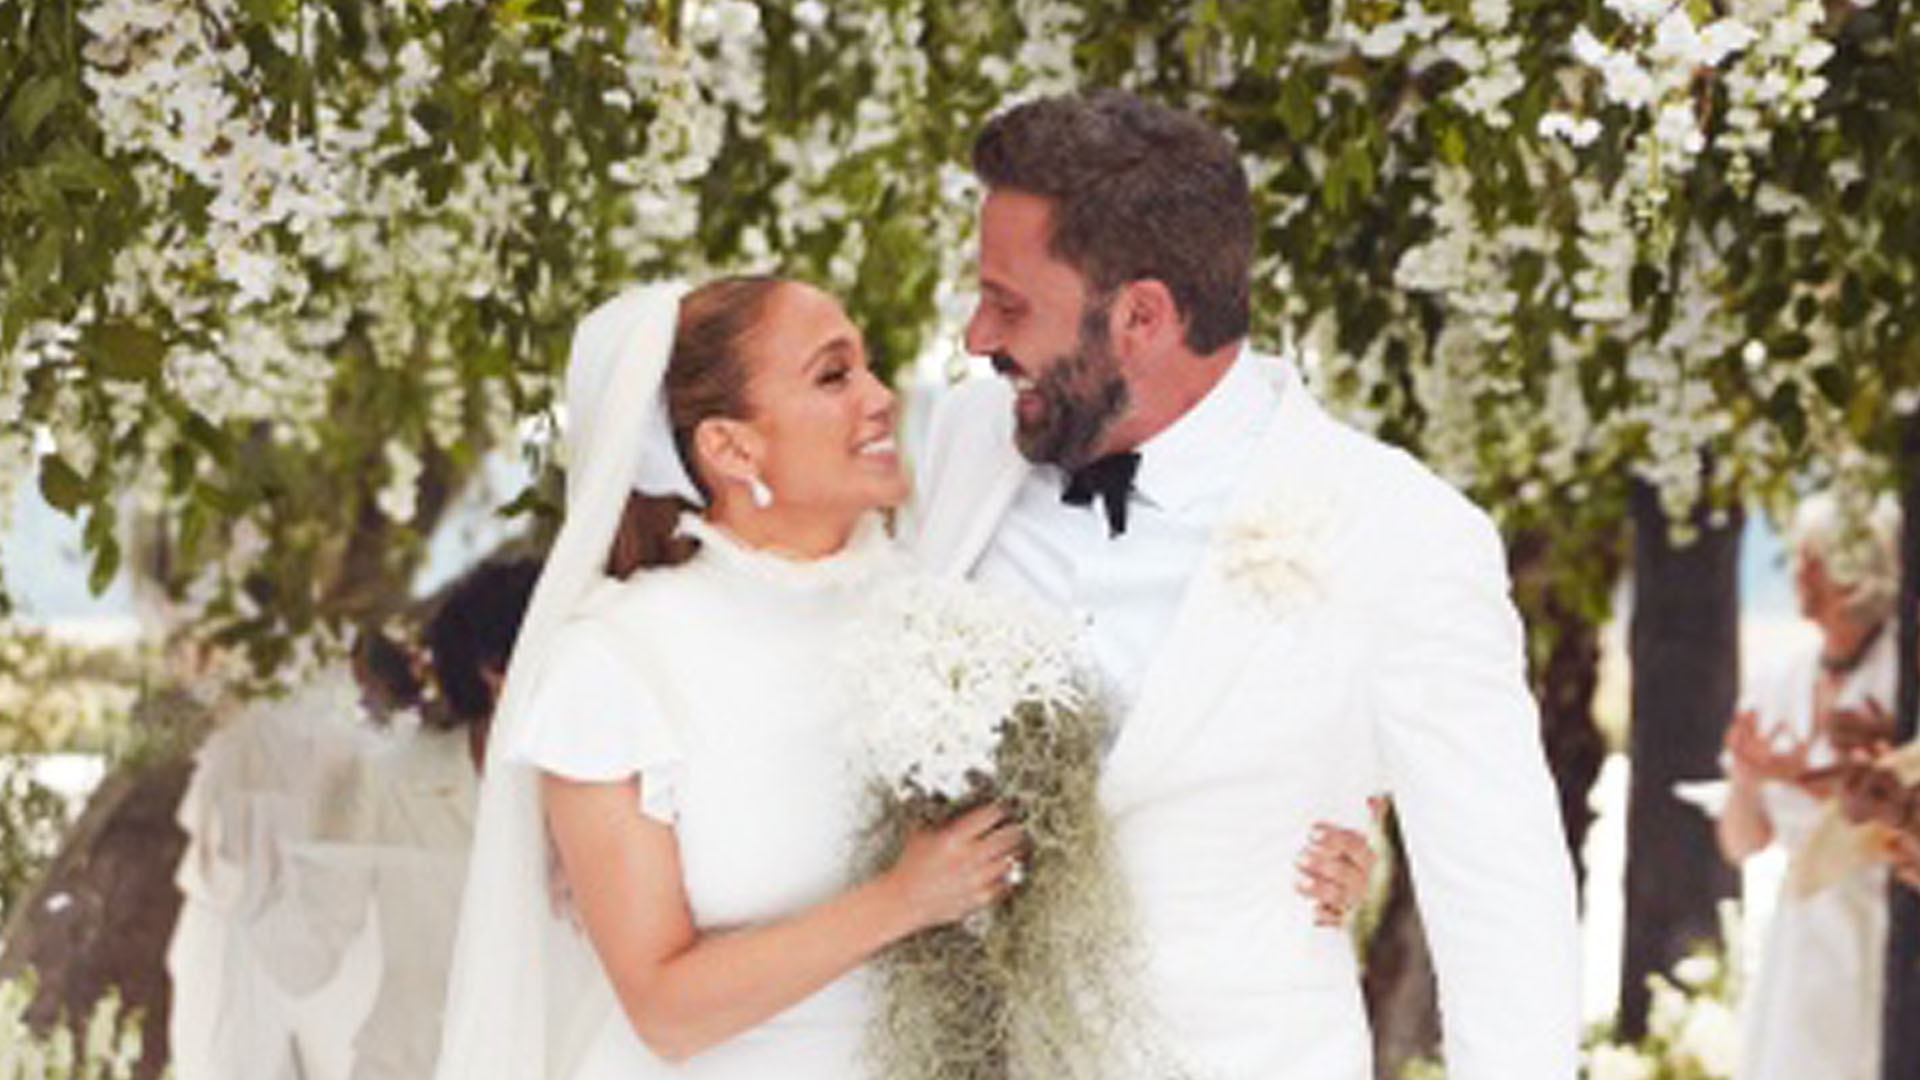 Love Is Blind's Mark Cuevas Marries Aubrey Rainey in Ohio